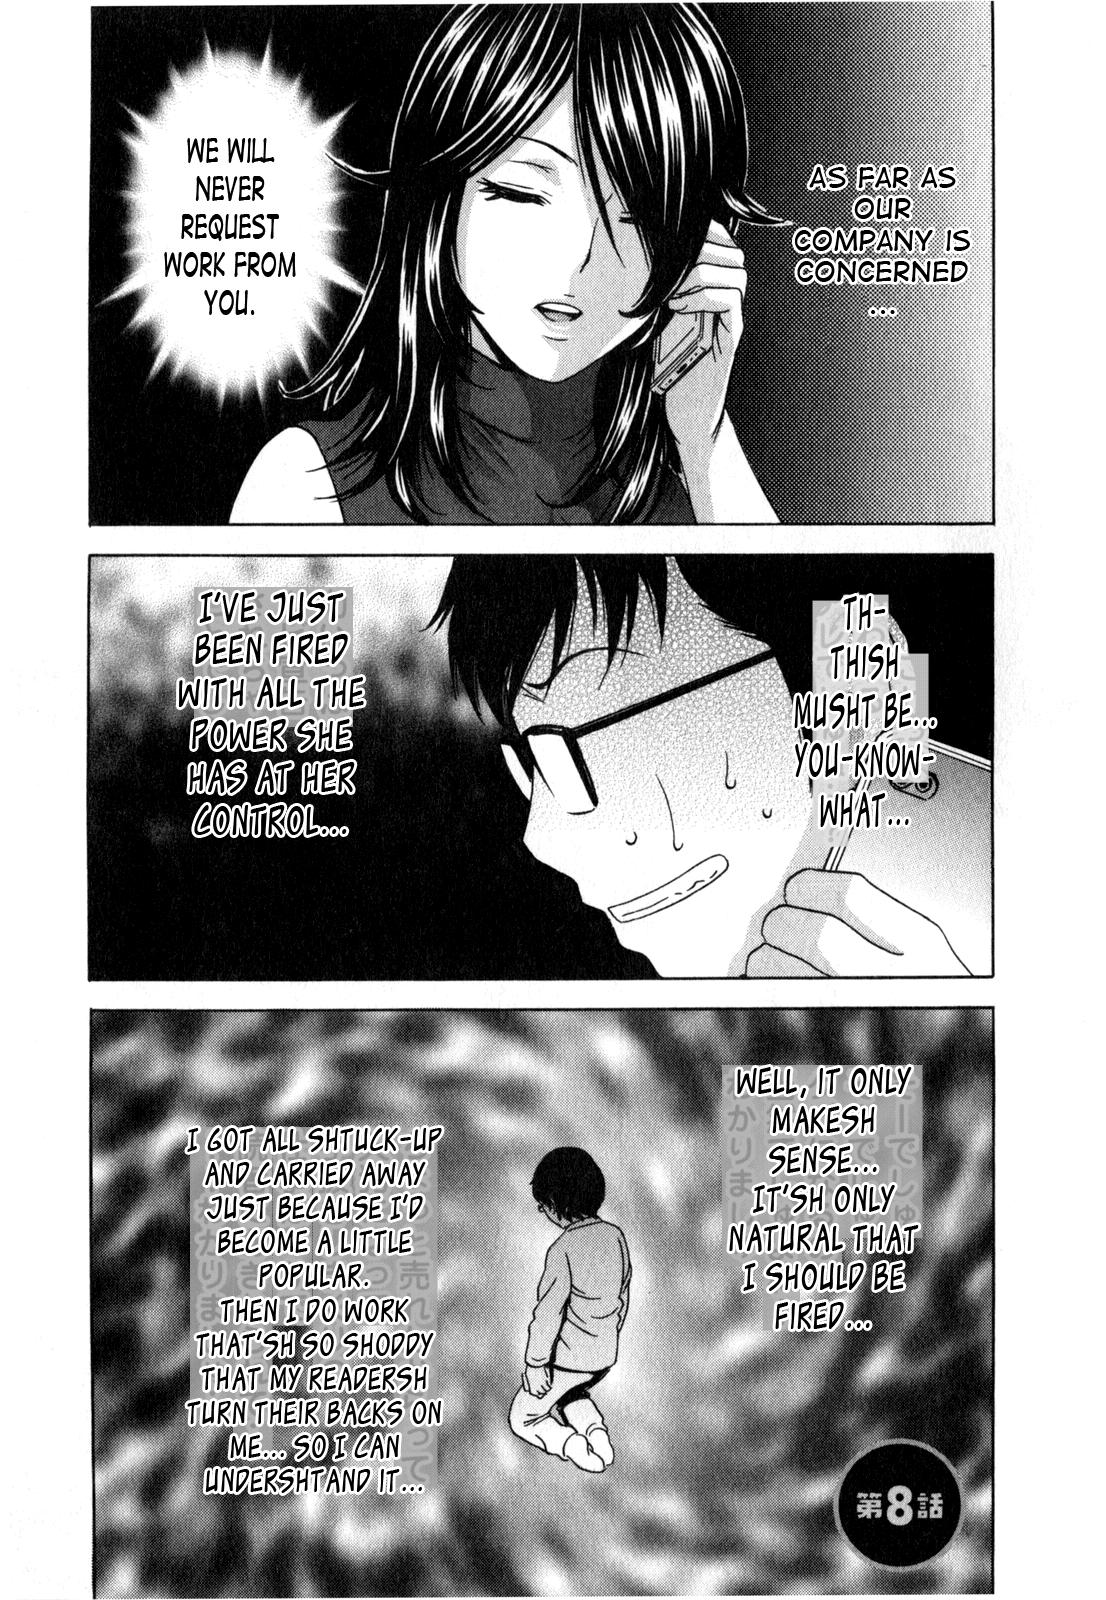 Life with Married Women Just Like a Manga 3 138